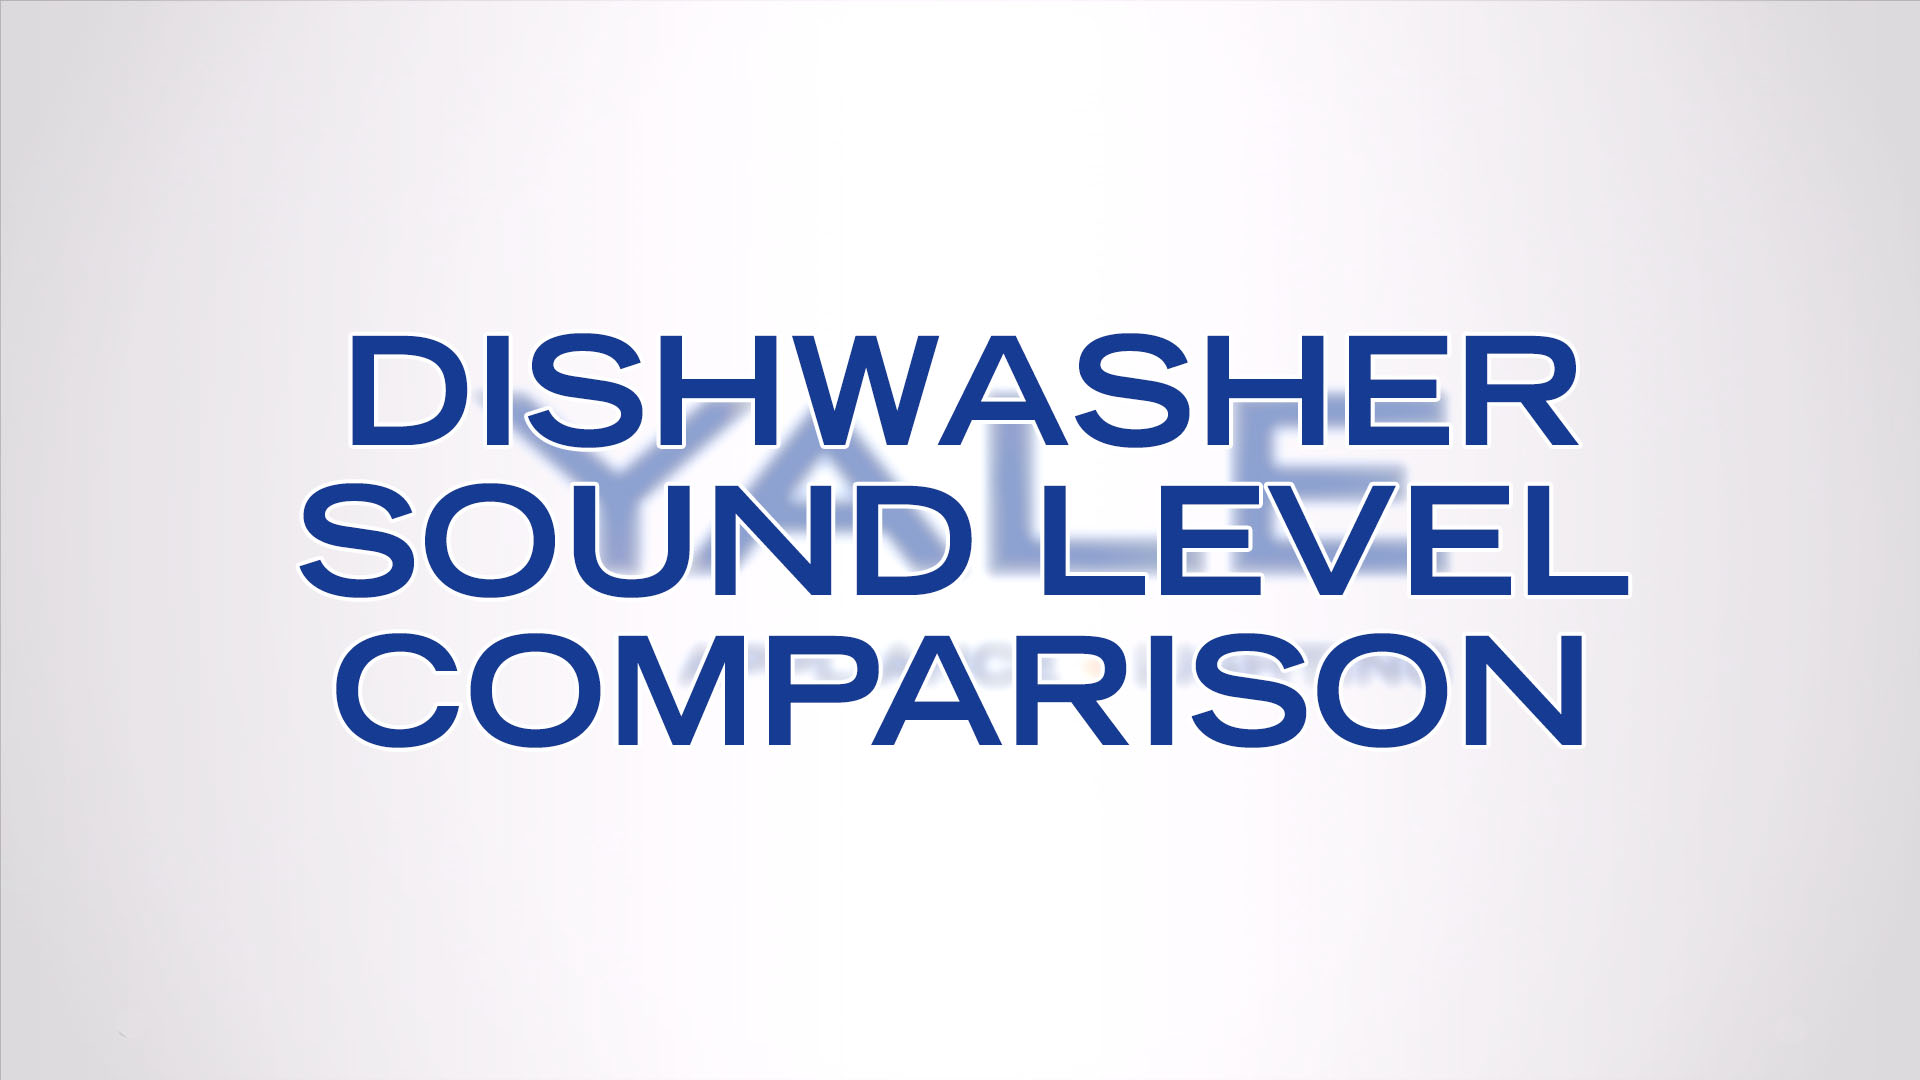 best dishwashers 2018 reviews